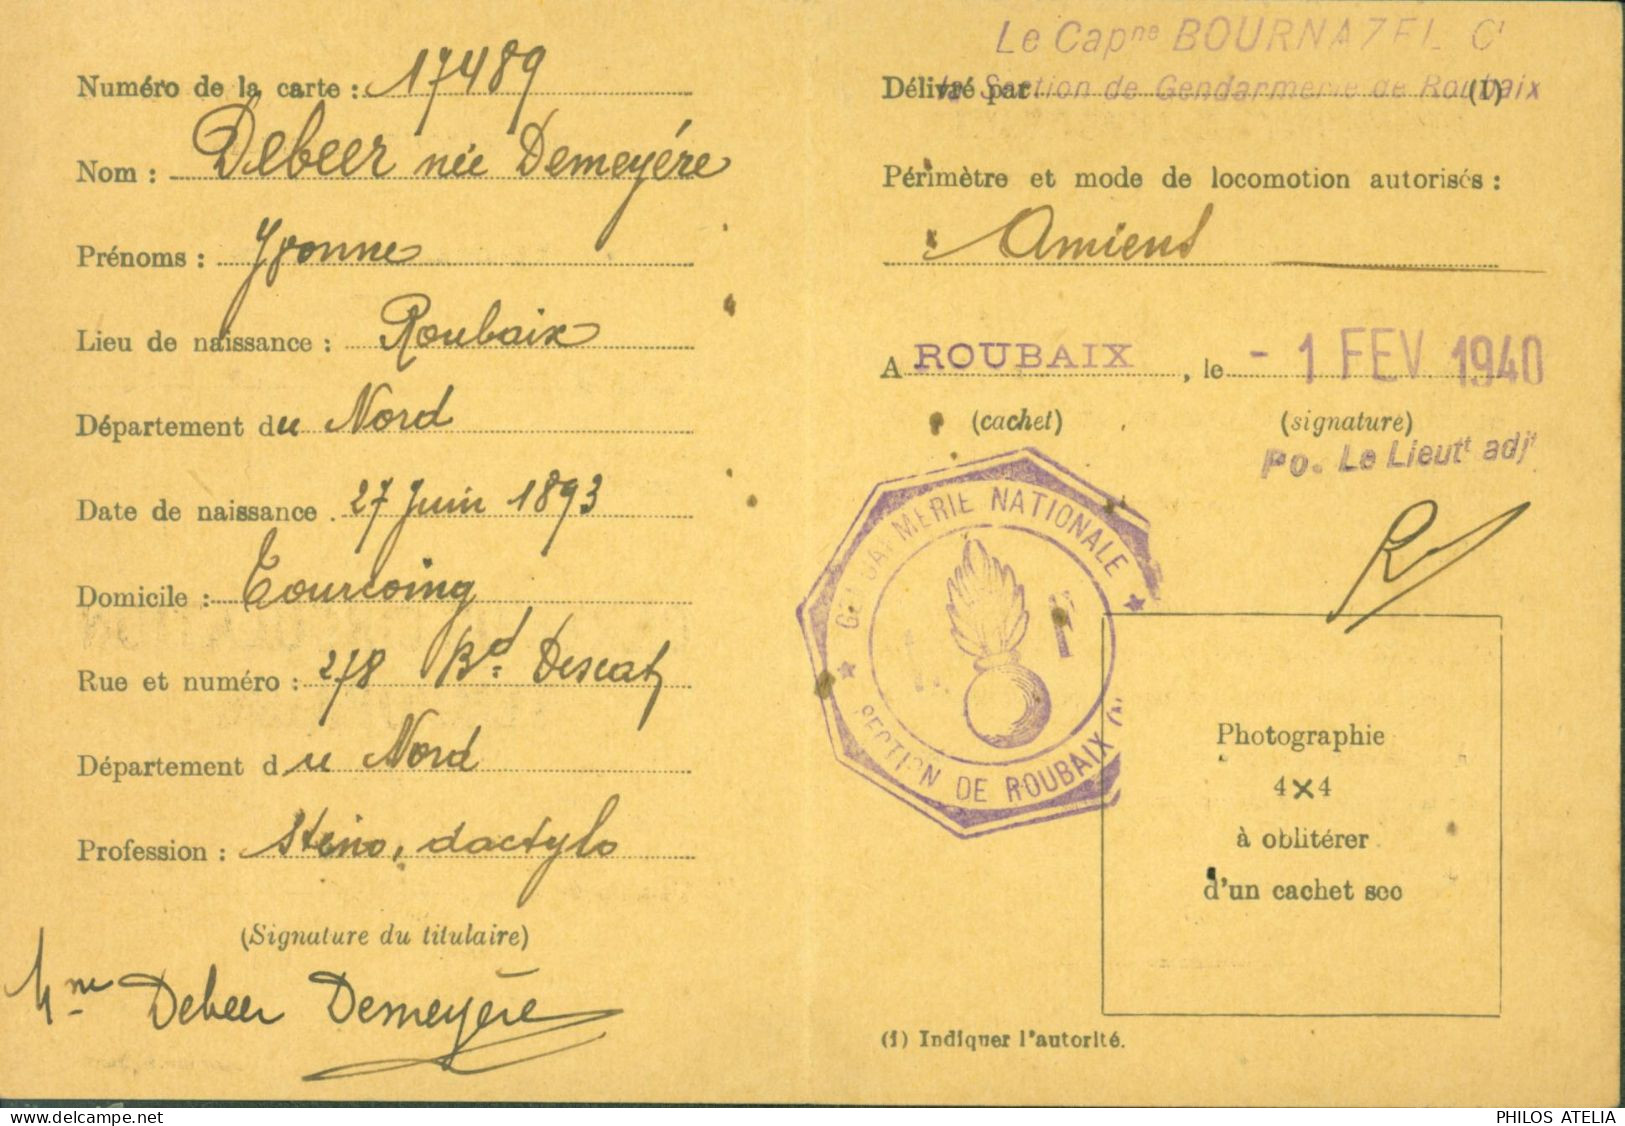 Guerre 40 Carte De Circulation Temporaire Tourcoing De Mai à Juin 1940 Cachet Gendarmerie Roubaix Nord - Guerra De 1939-45